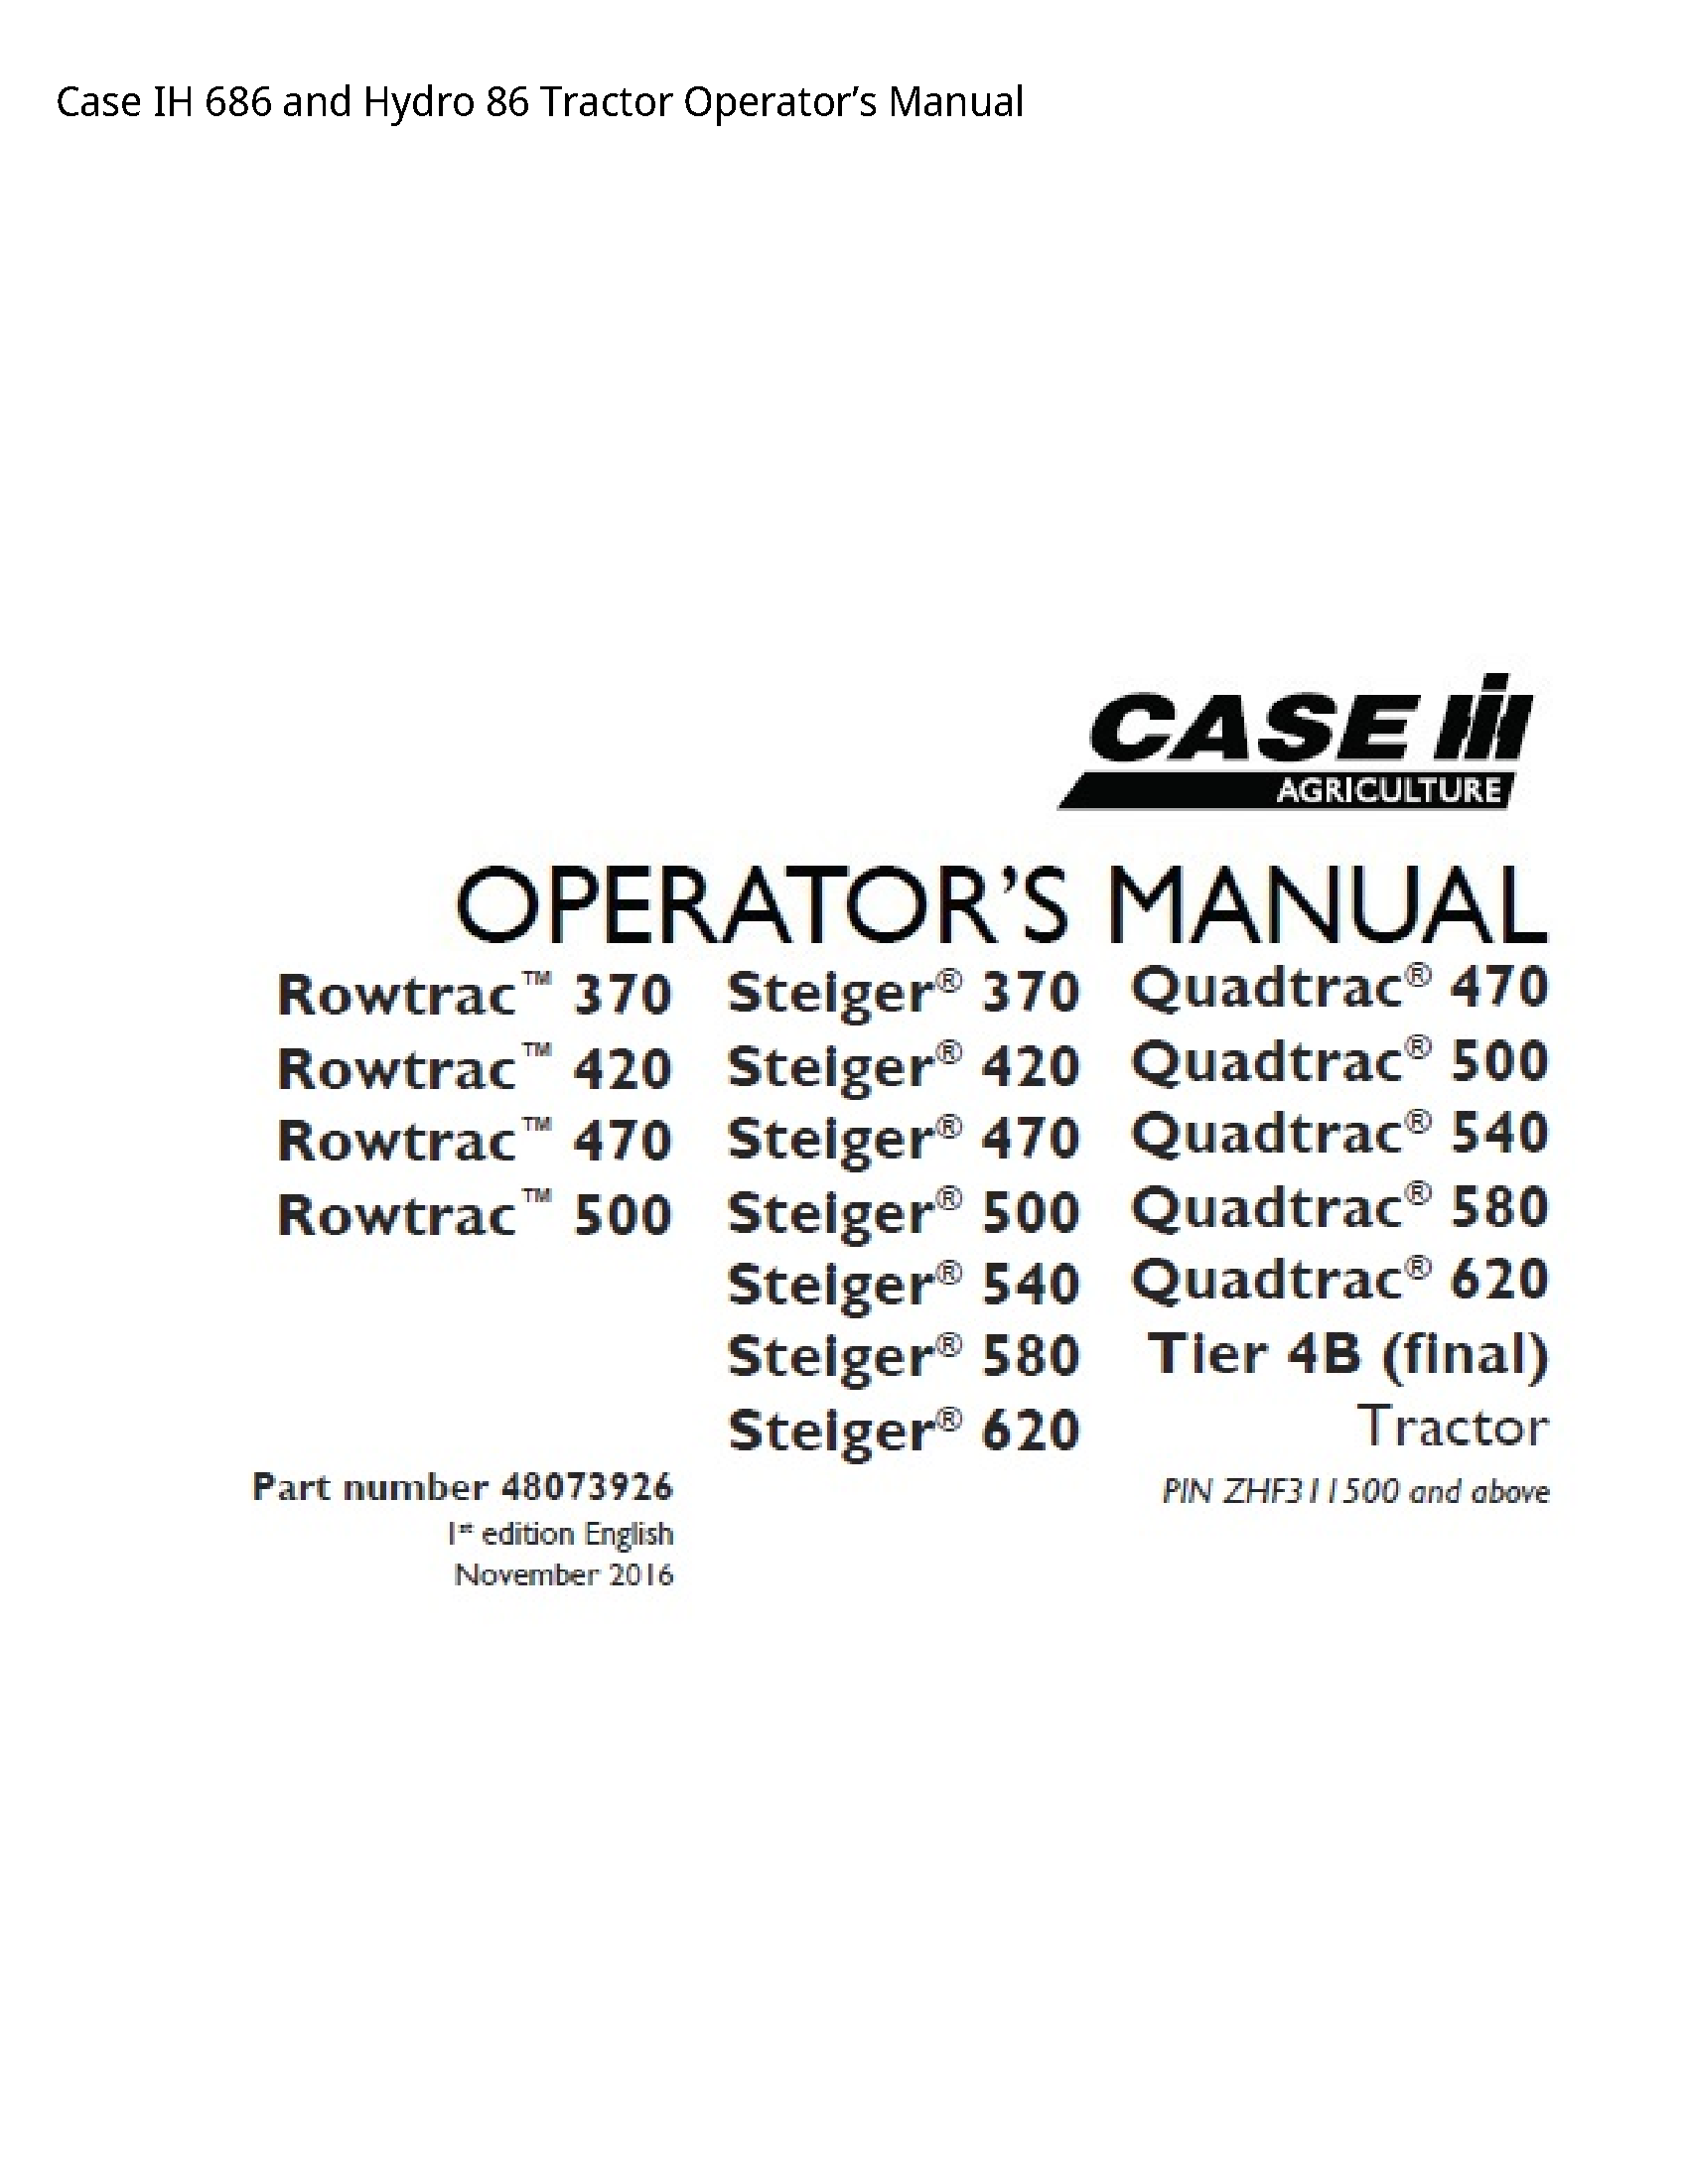 Case/Case IH 686 IH  Hydro Tractor Operator’s manual